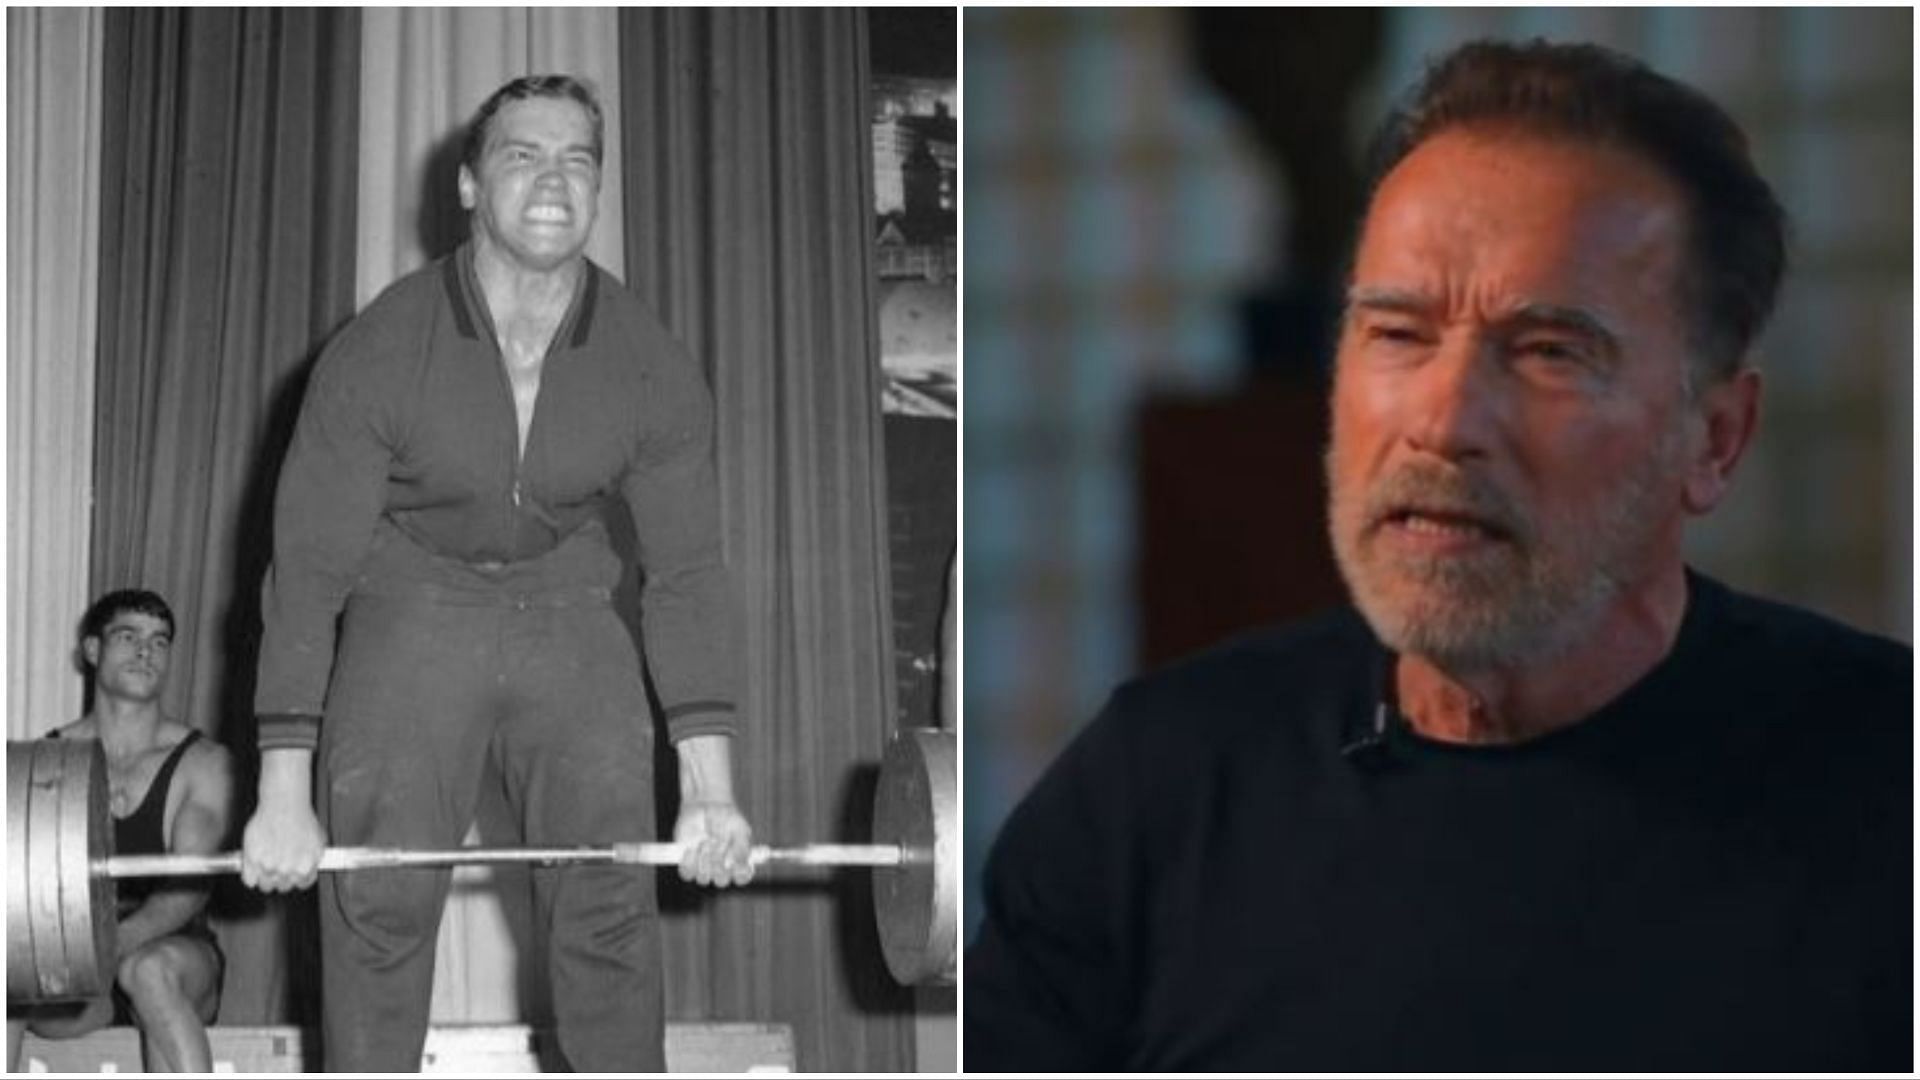 Arnold Schwarzenegger (via Instagram/@schwarzenegger)